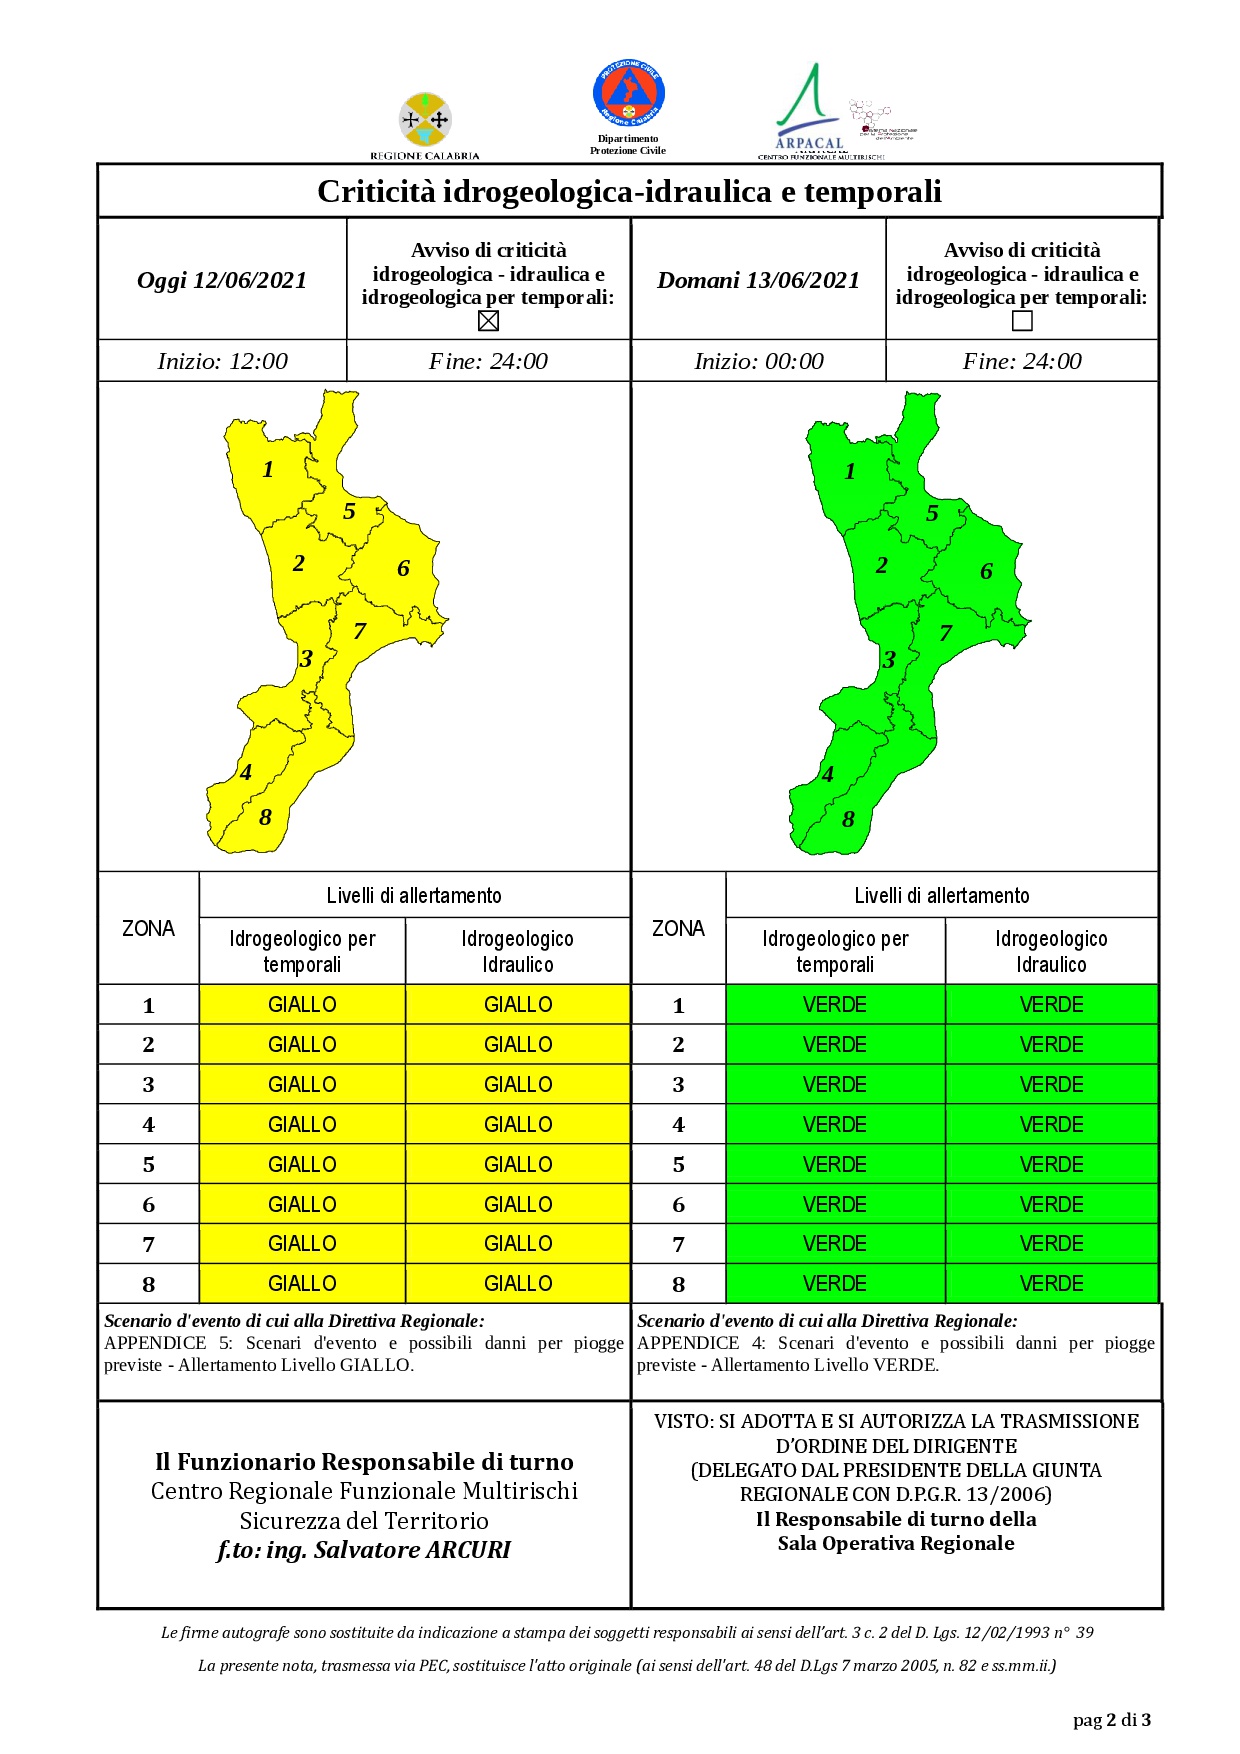 Criticità idrogeologica-idraulica e temporali in Calabria 12-06-2021